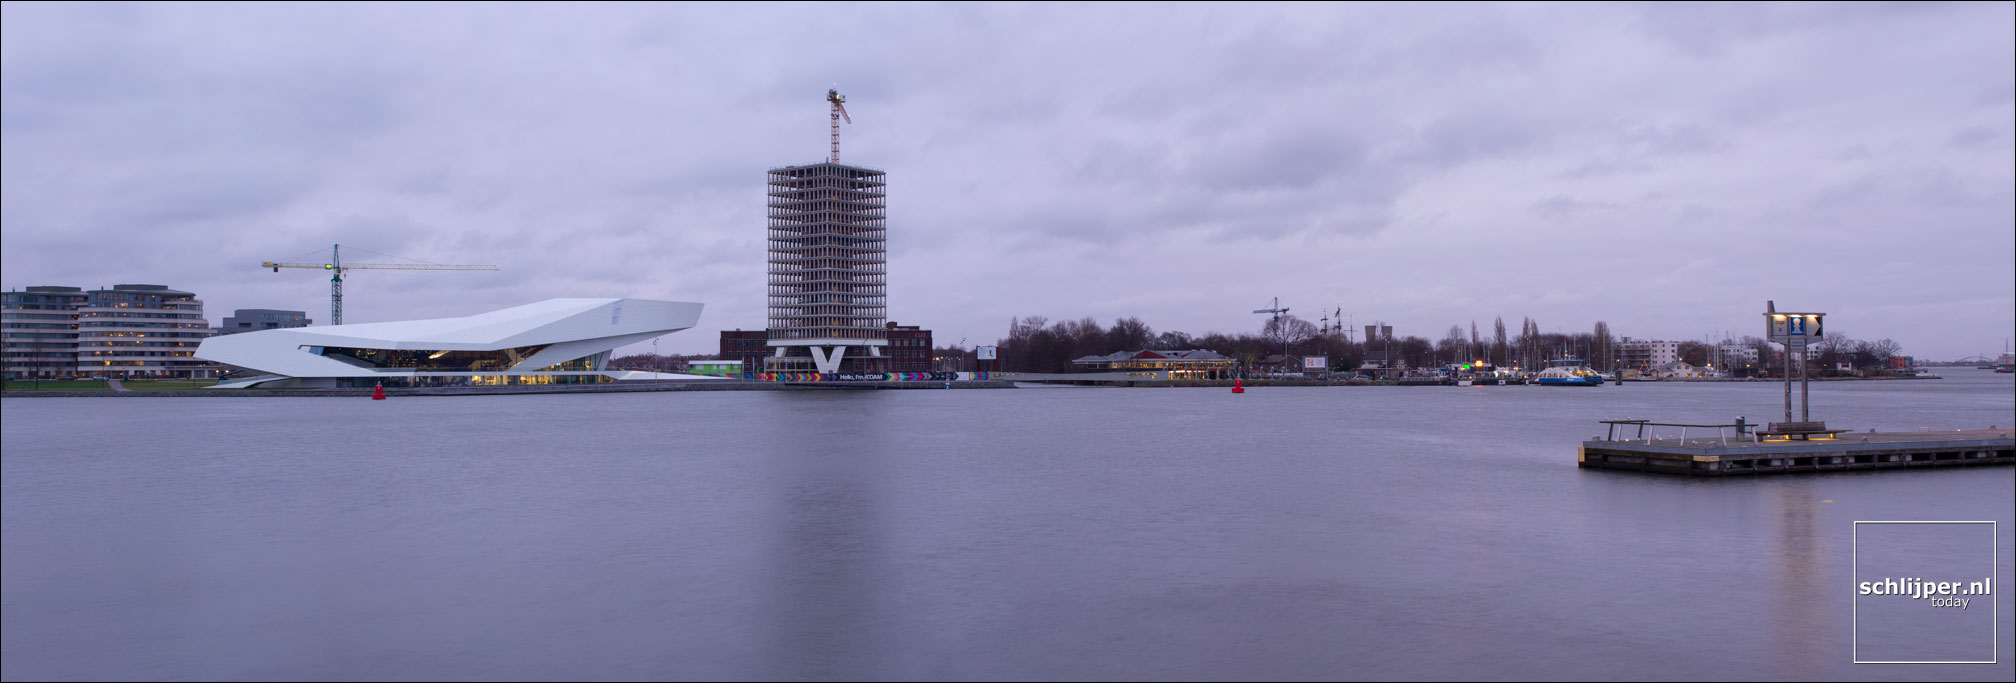 Nederland, Amsterdam, 21 december 2014